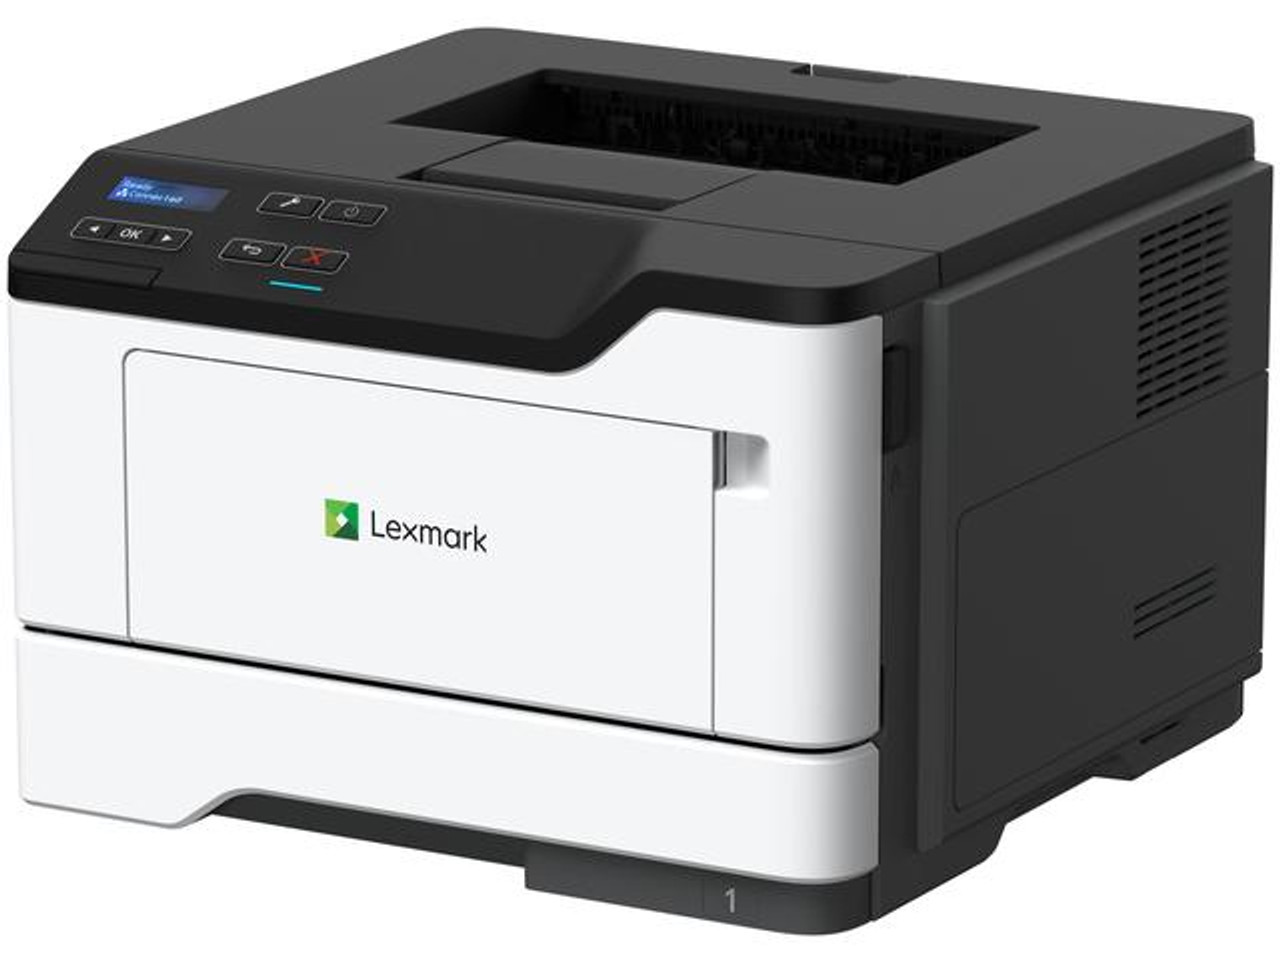 Networking Duplex Printing Lexmark 36S0100 MS321dn Compact Laser Printer Monochrome 